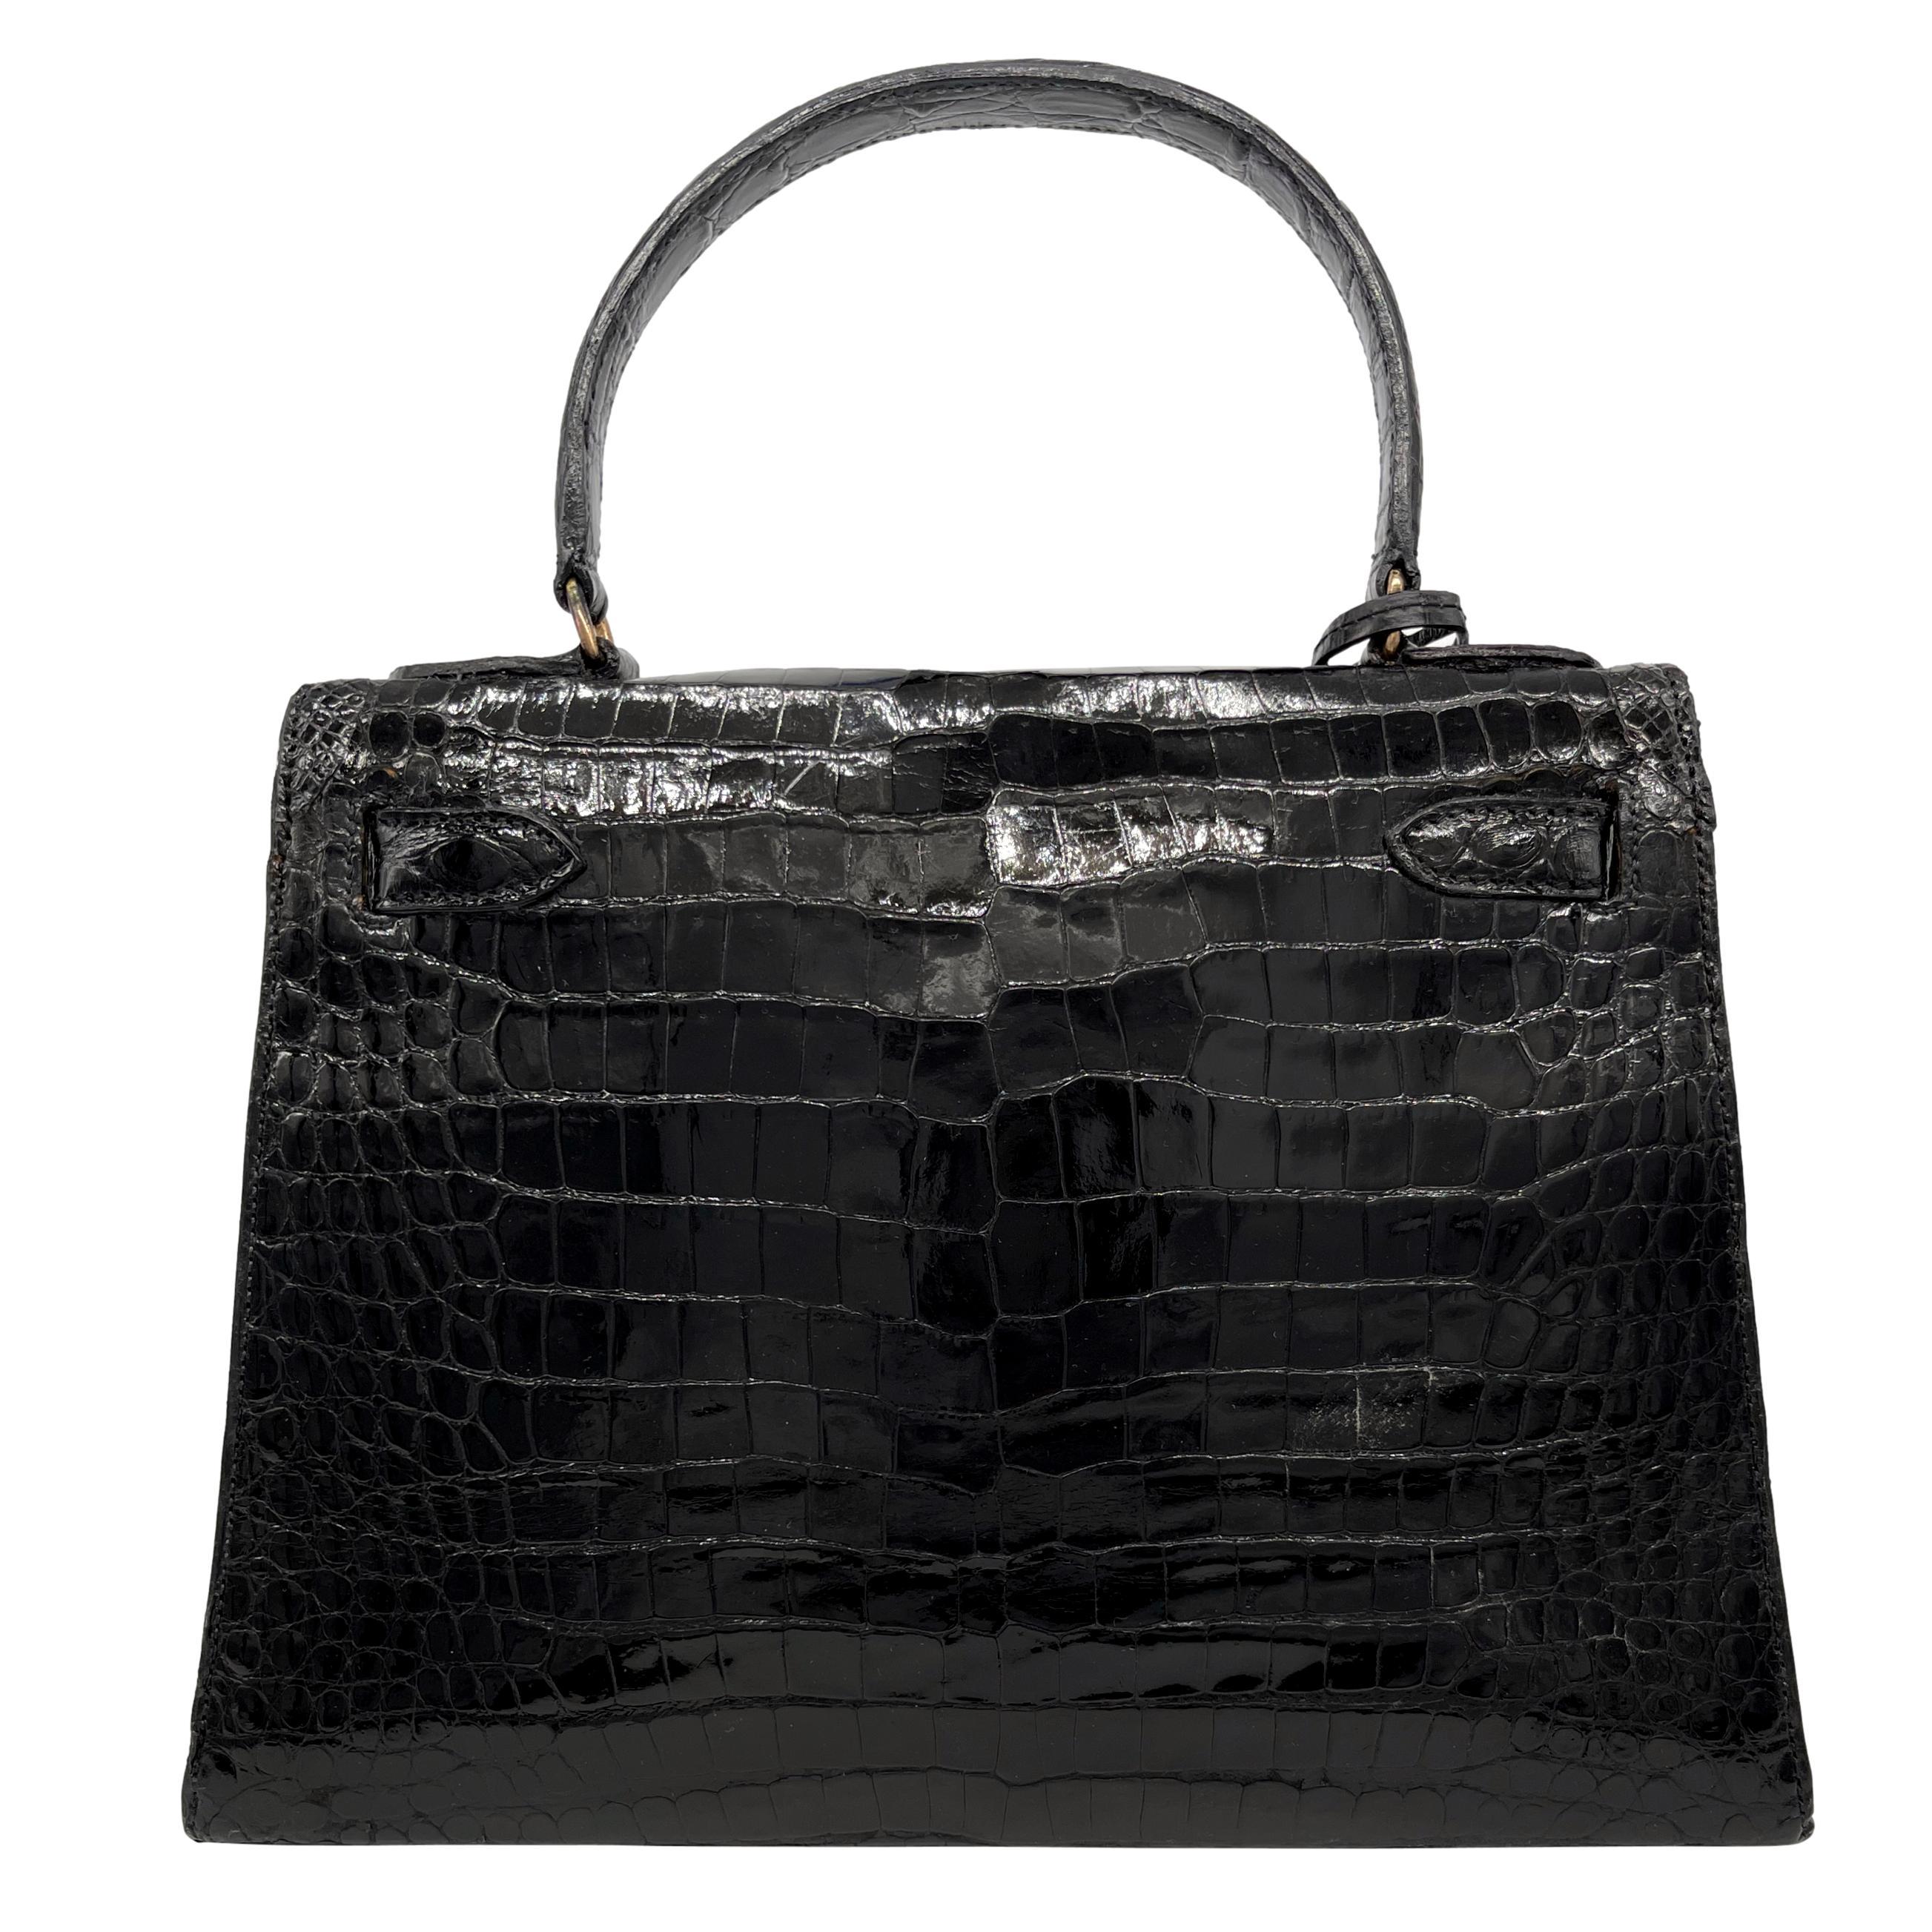 Hermès Shiny Black Porosus Crocodile Kelly Bag with Gold Hardware 28, 1940. For Sale 4